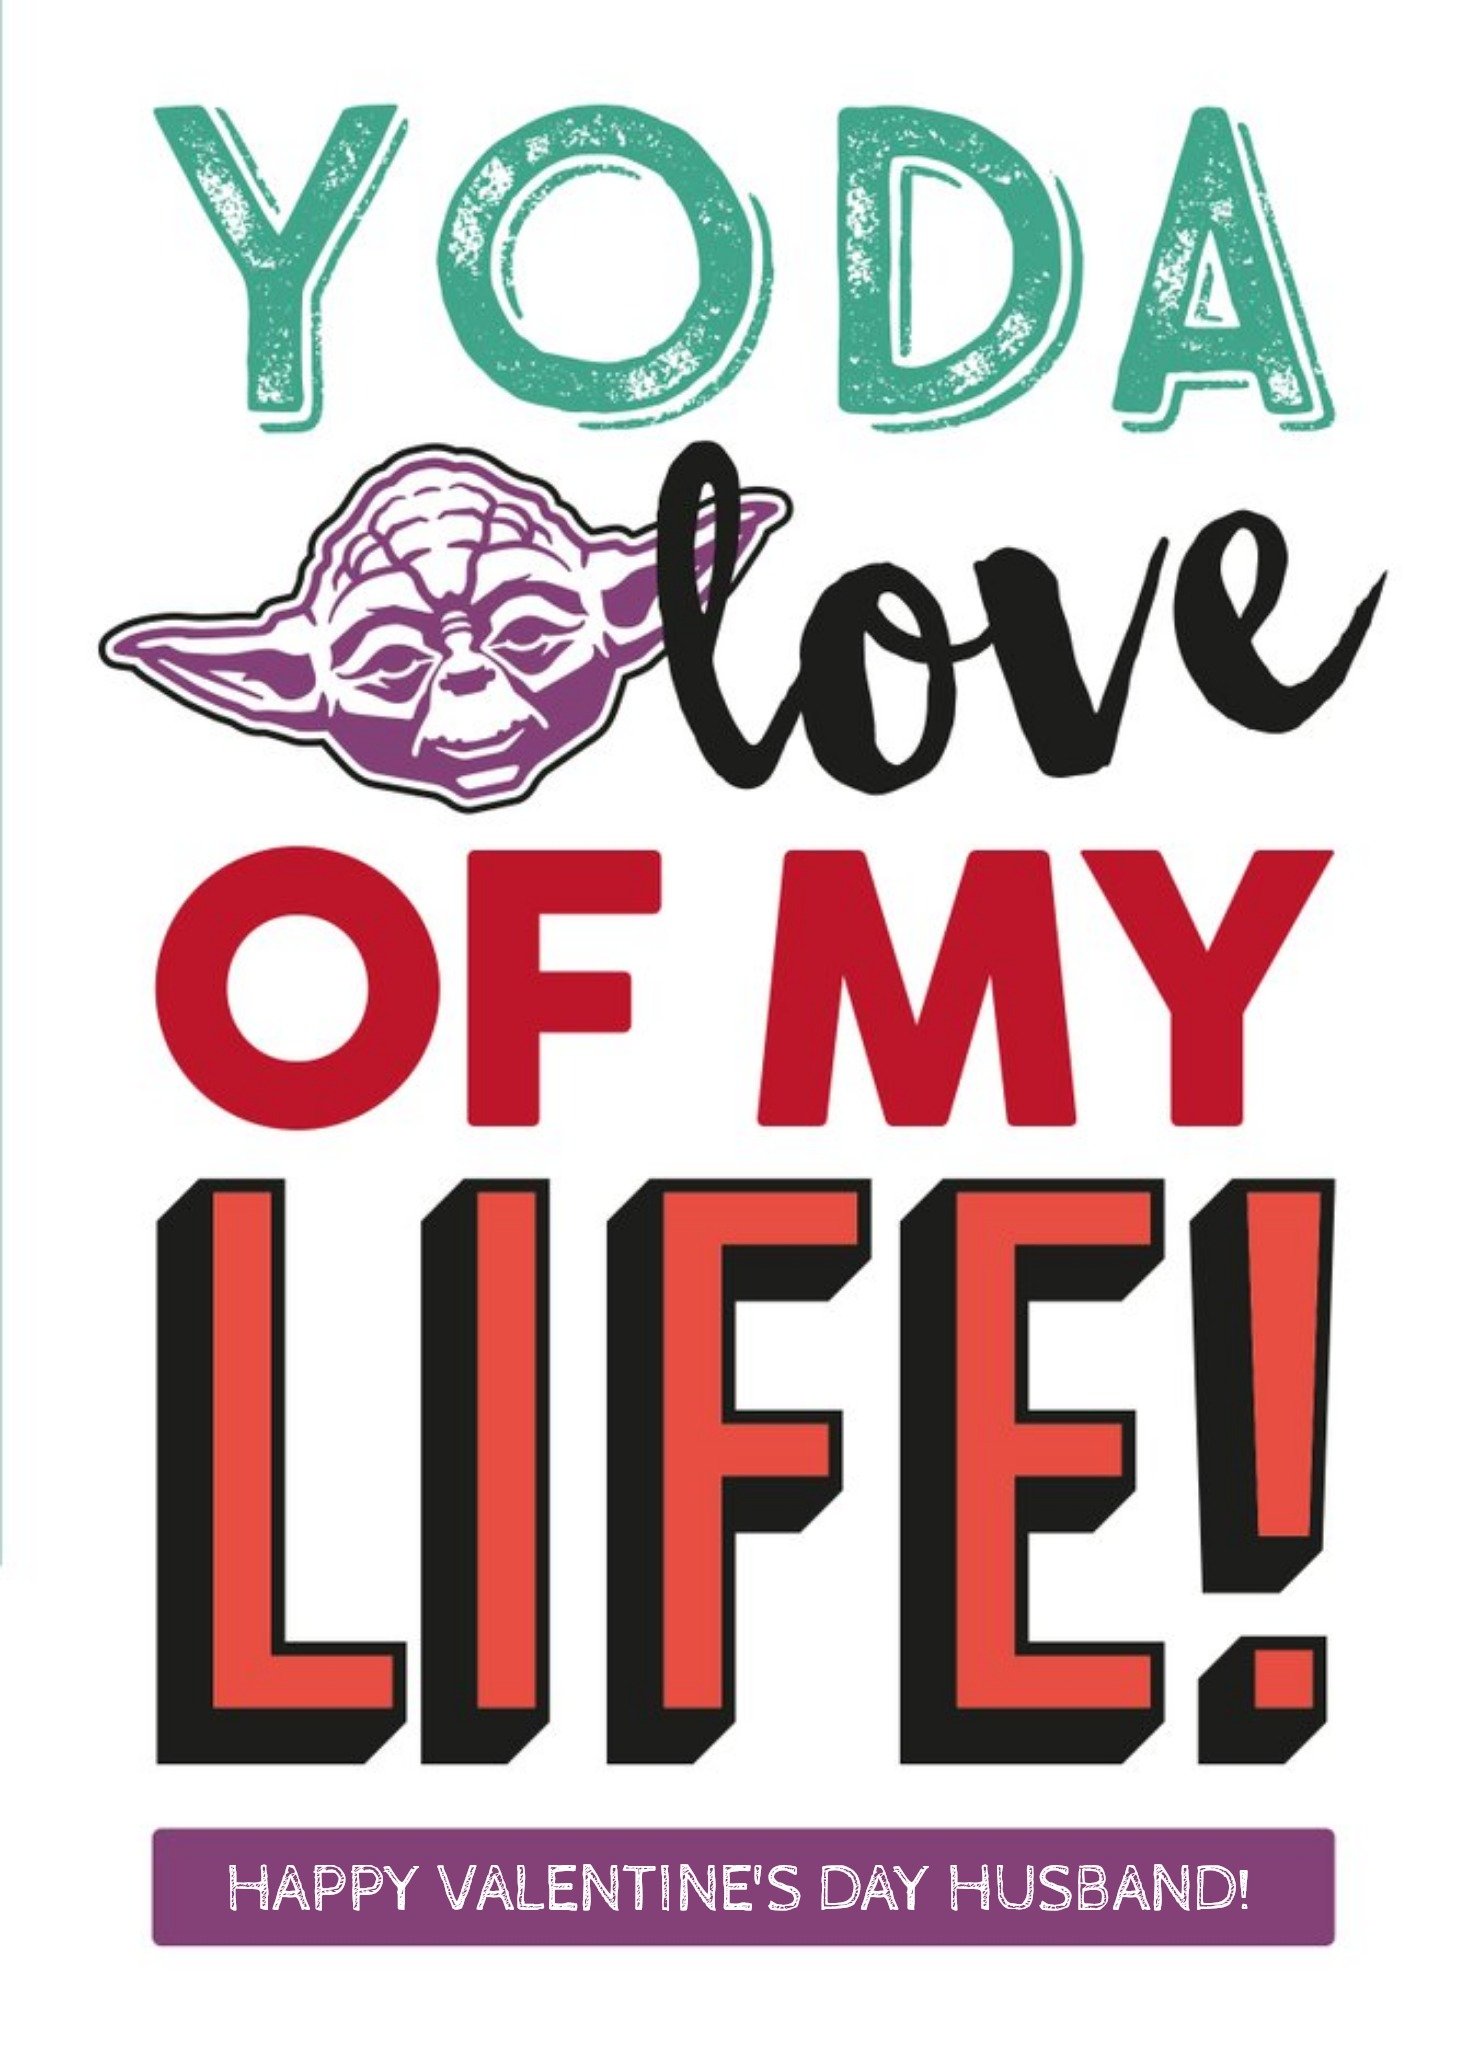 Disney Star Wars Yoda Love Of My Life Valentine's Day Husband Card, Large